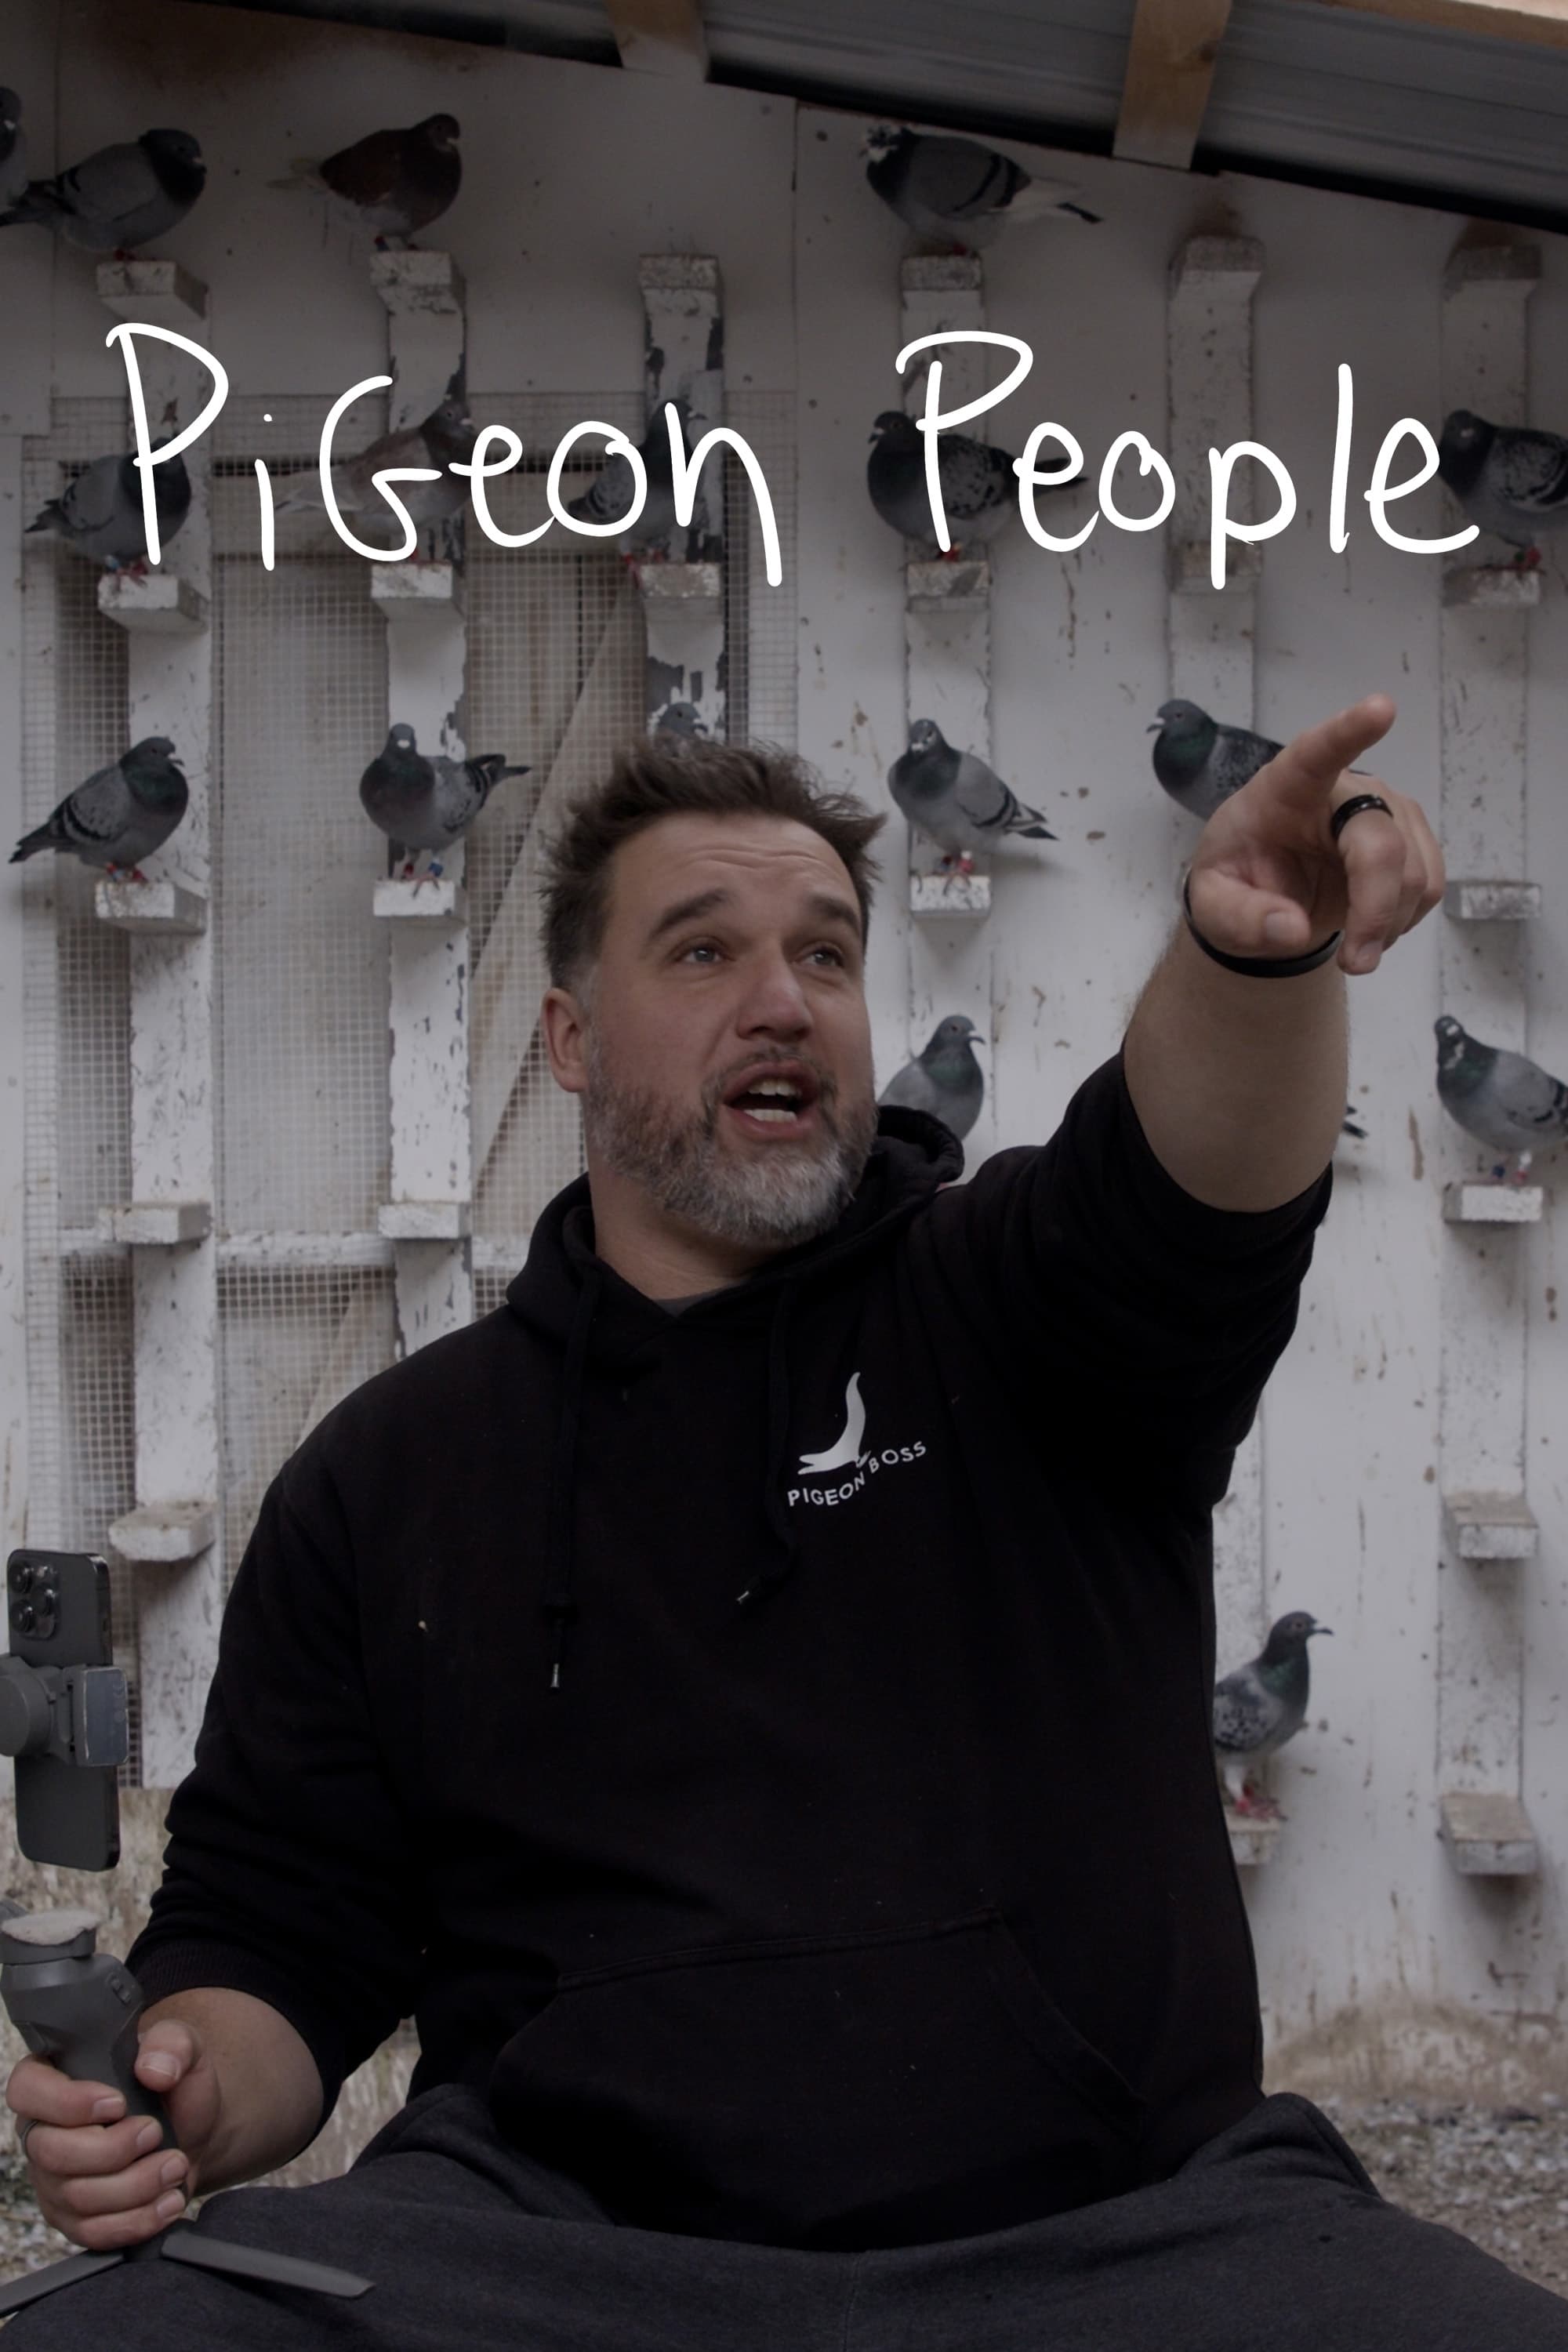 Pigeon People